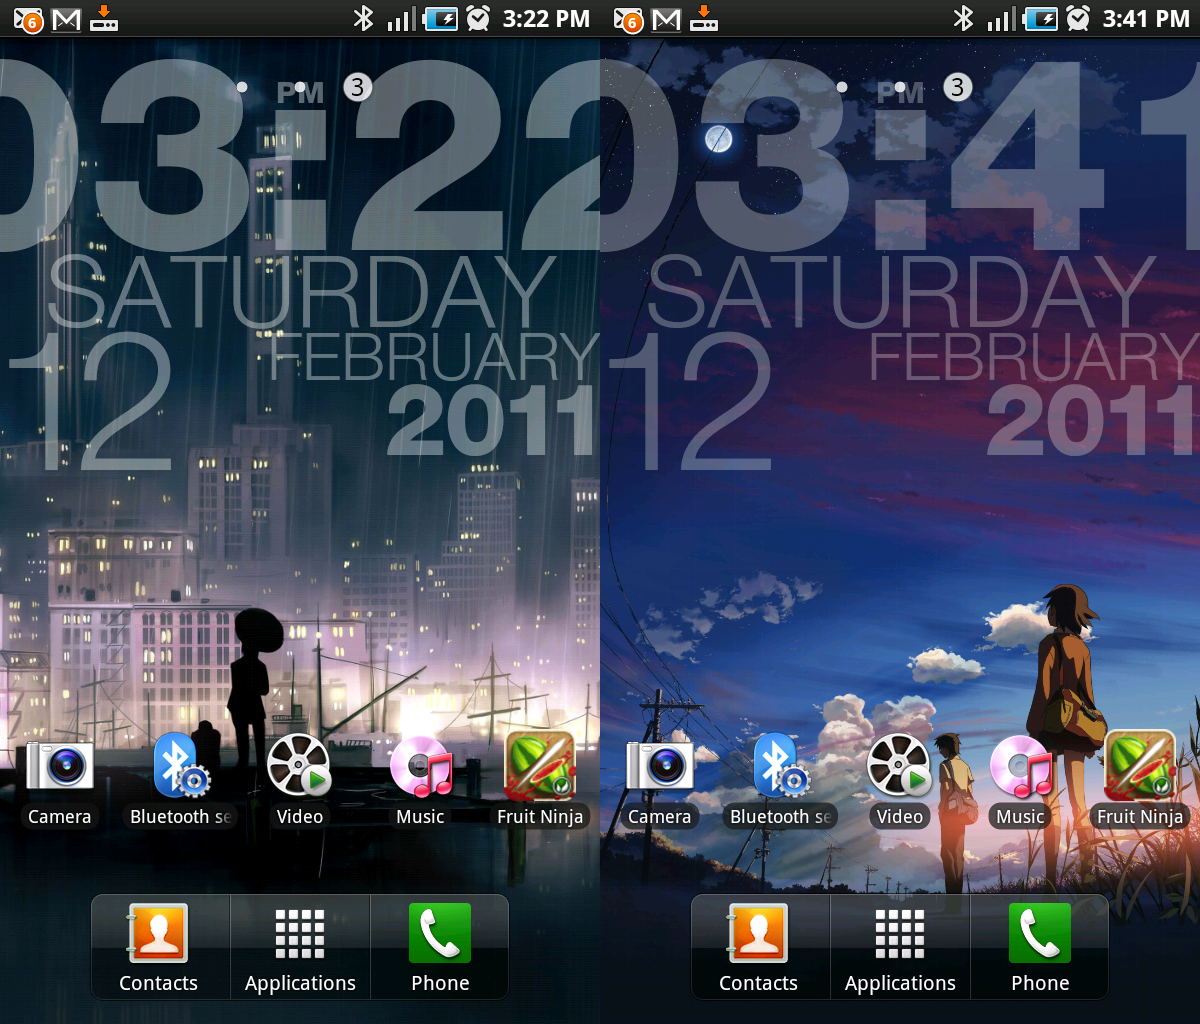 Two screenshots of WP Clock running on the Samsung Galaxy Tab Click